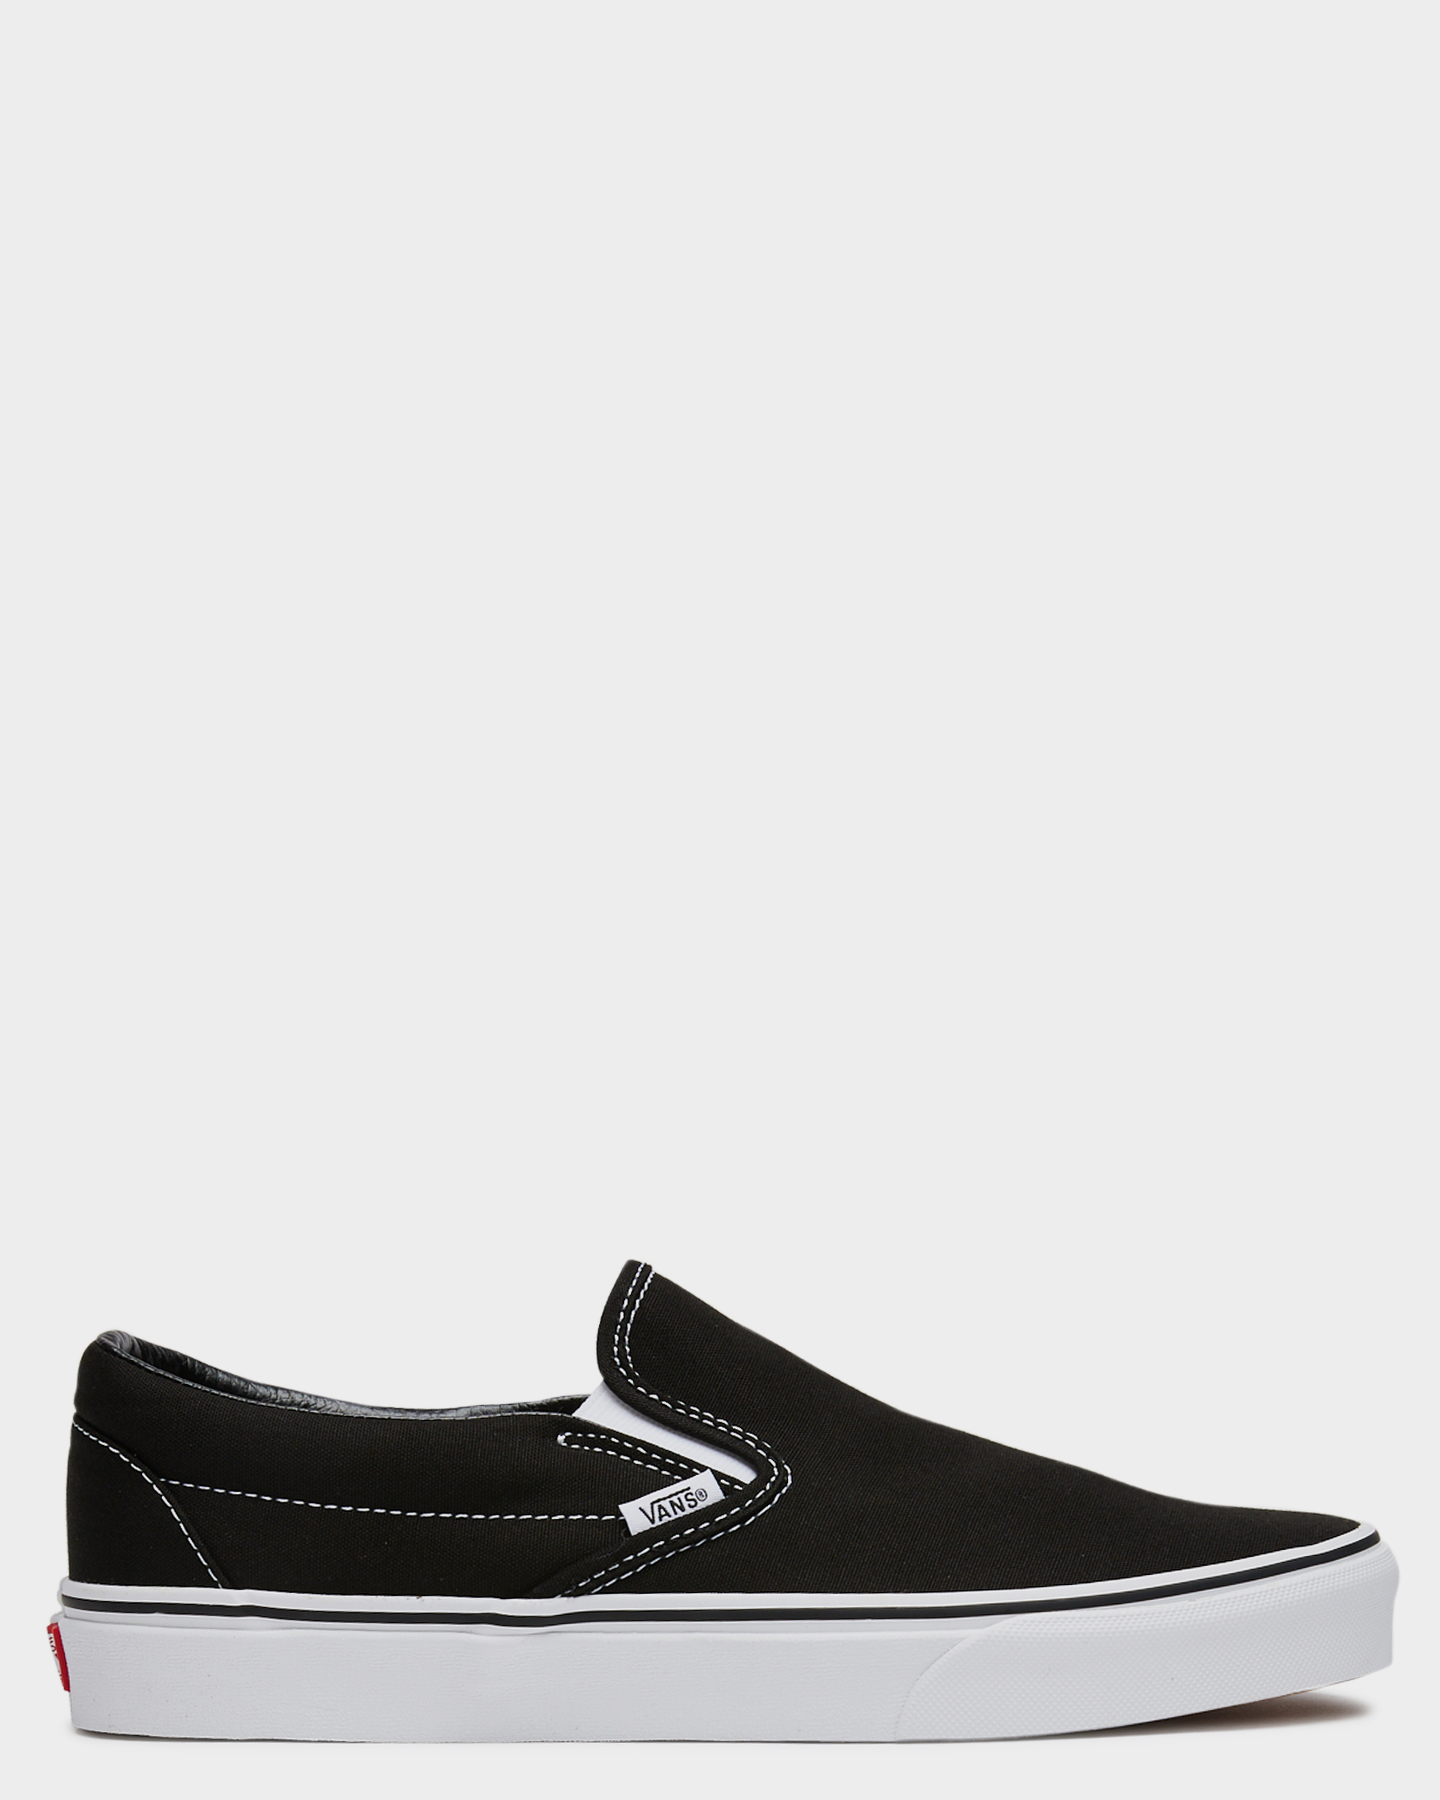 Vans Classic Slip On Shoe - Black